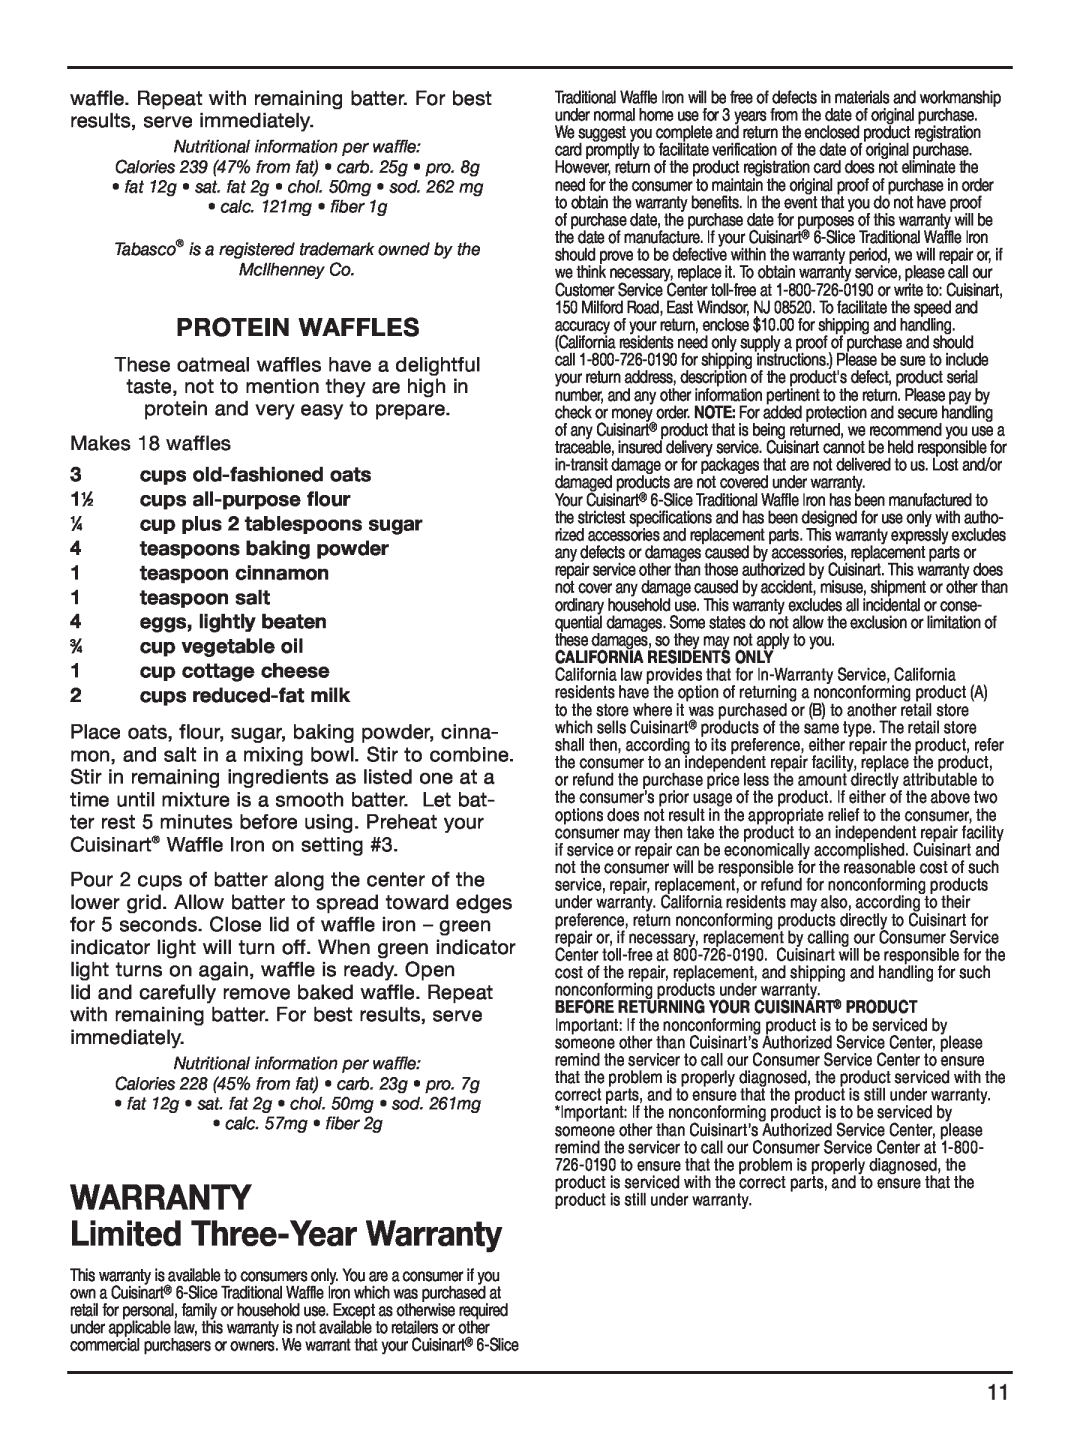 Cuisinart WAF-6 manual Limited Three-YearWarranty, Protein Waffles 